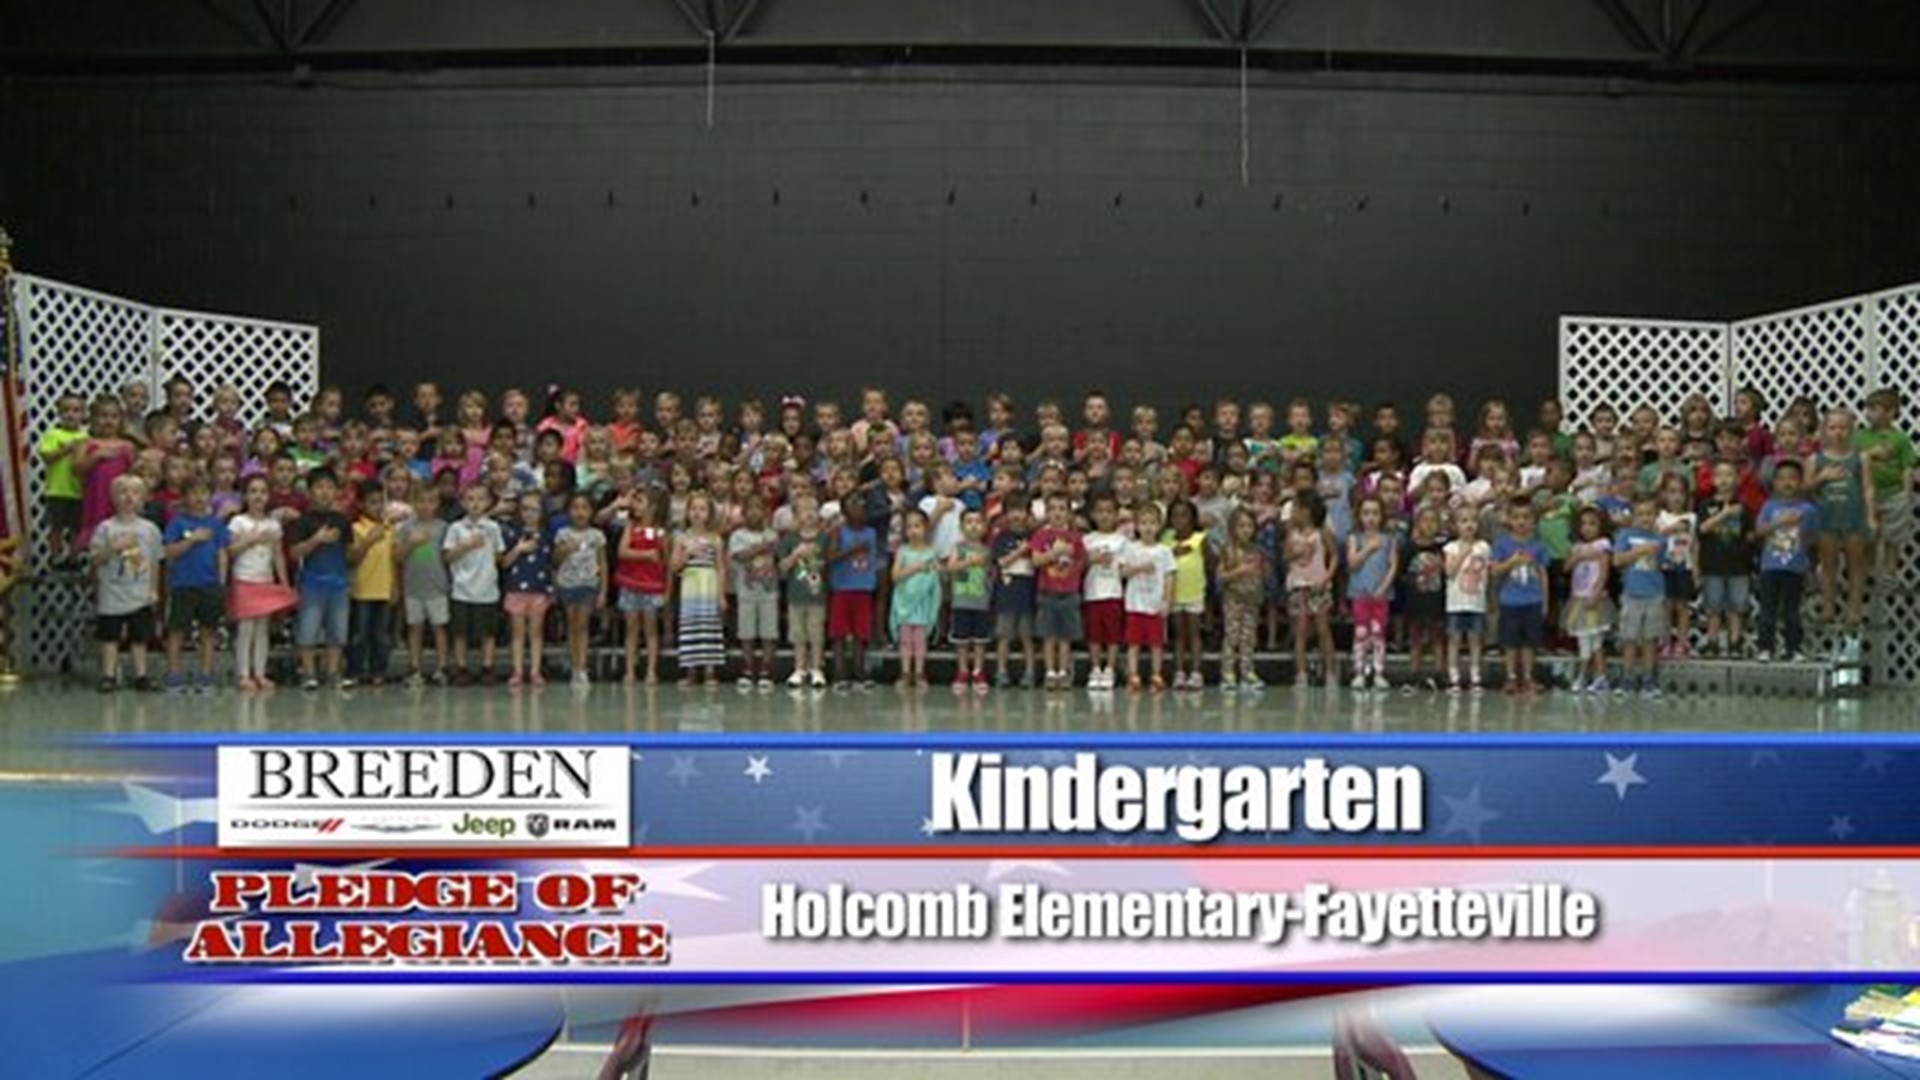 Holcomb Elementary -Fayetteville - Kindergarten